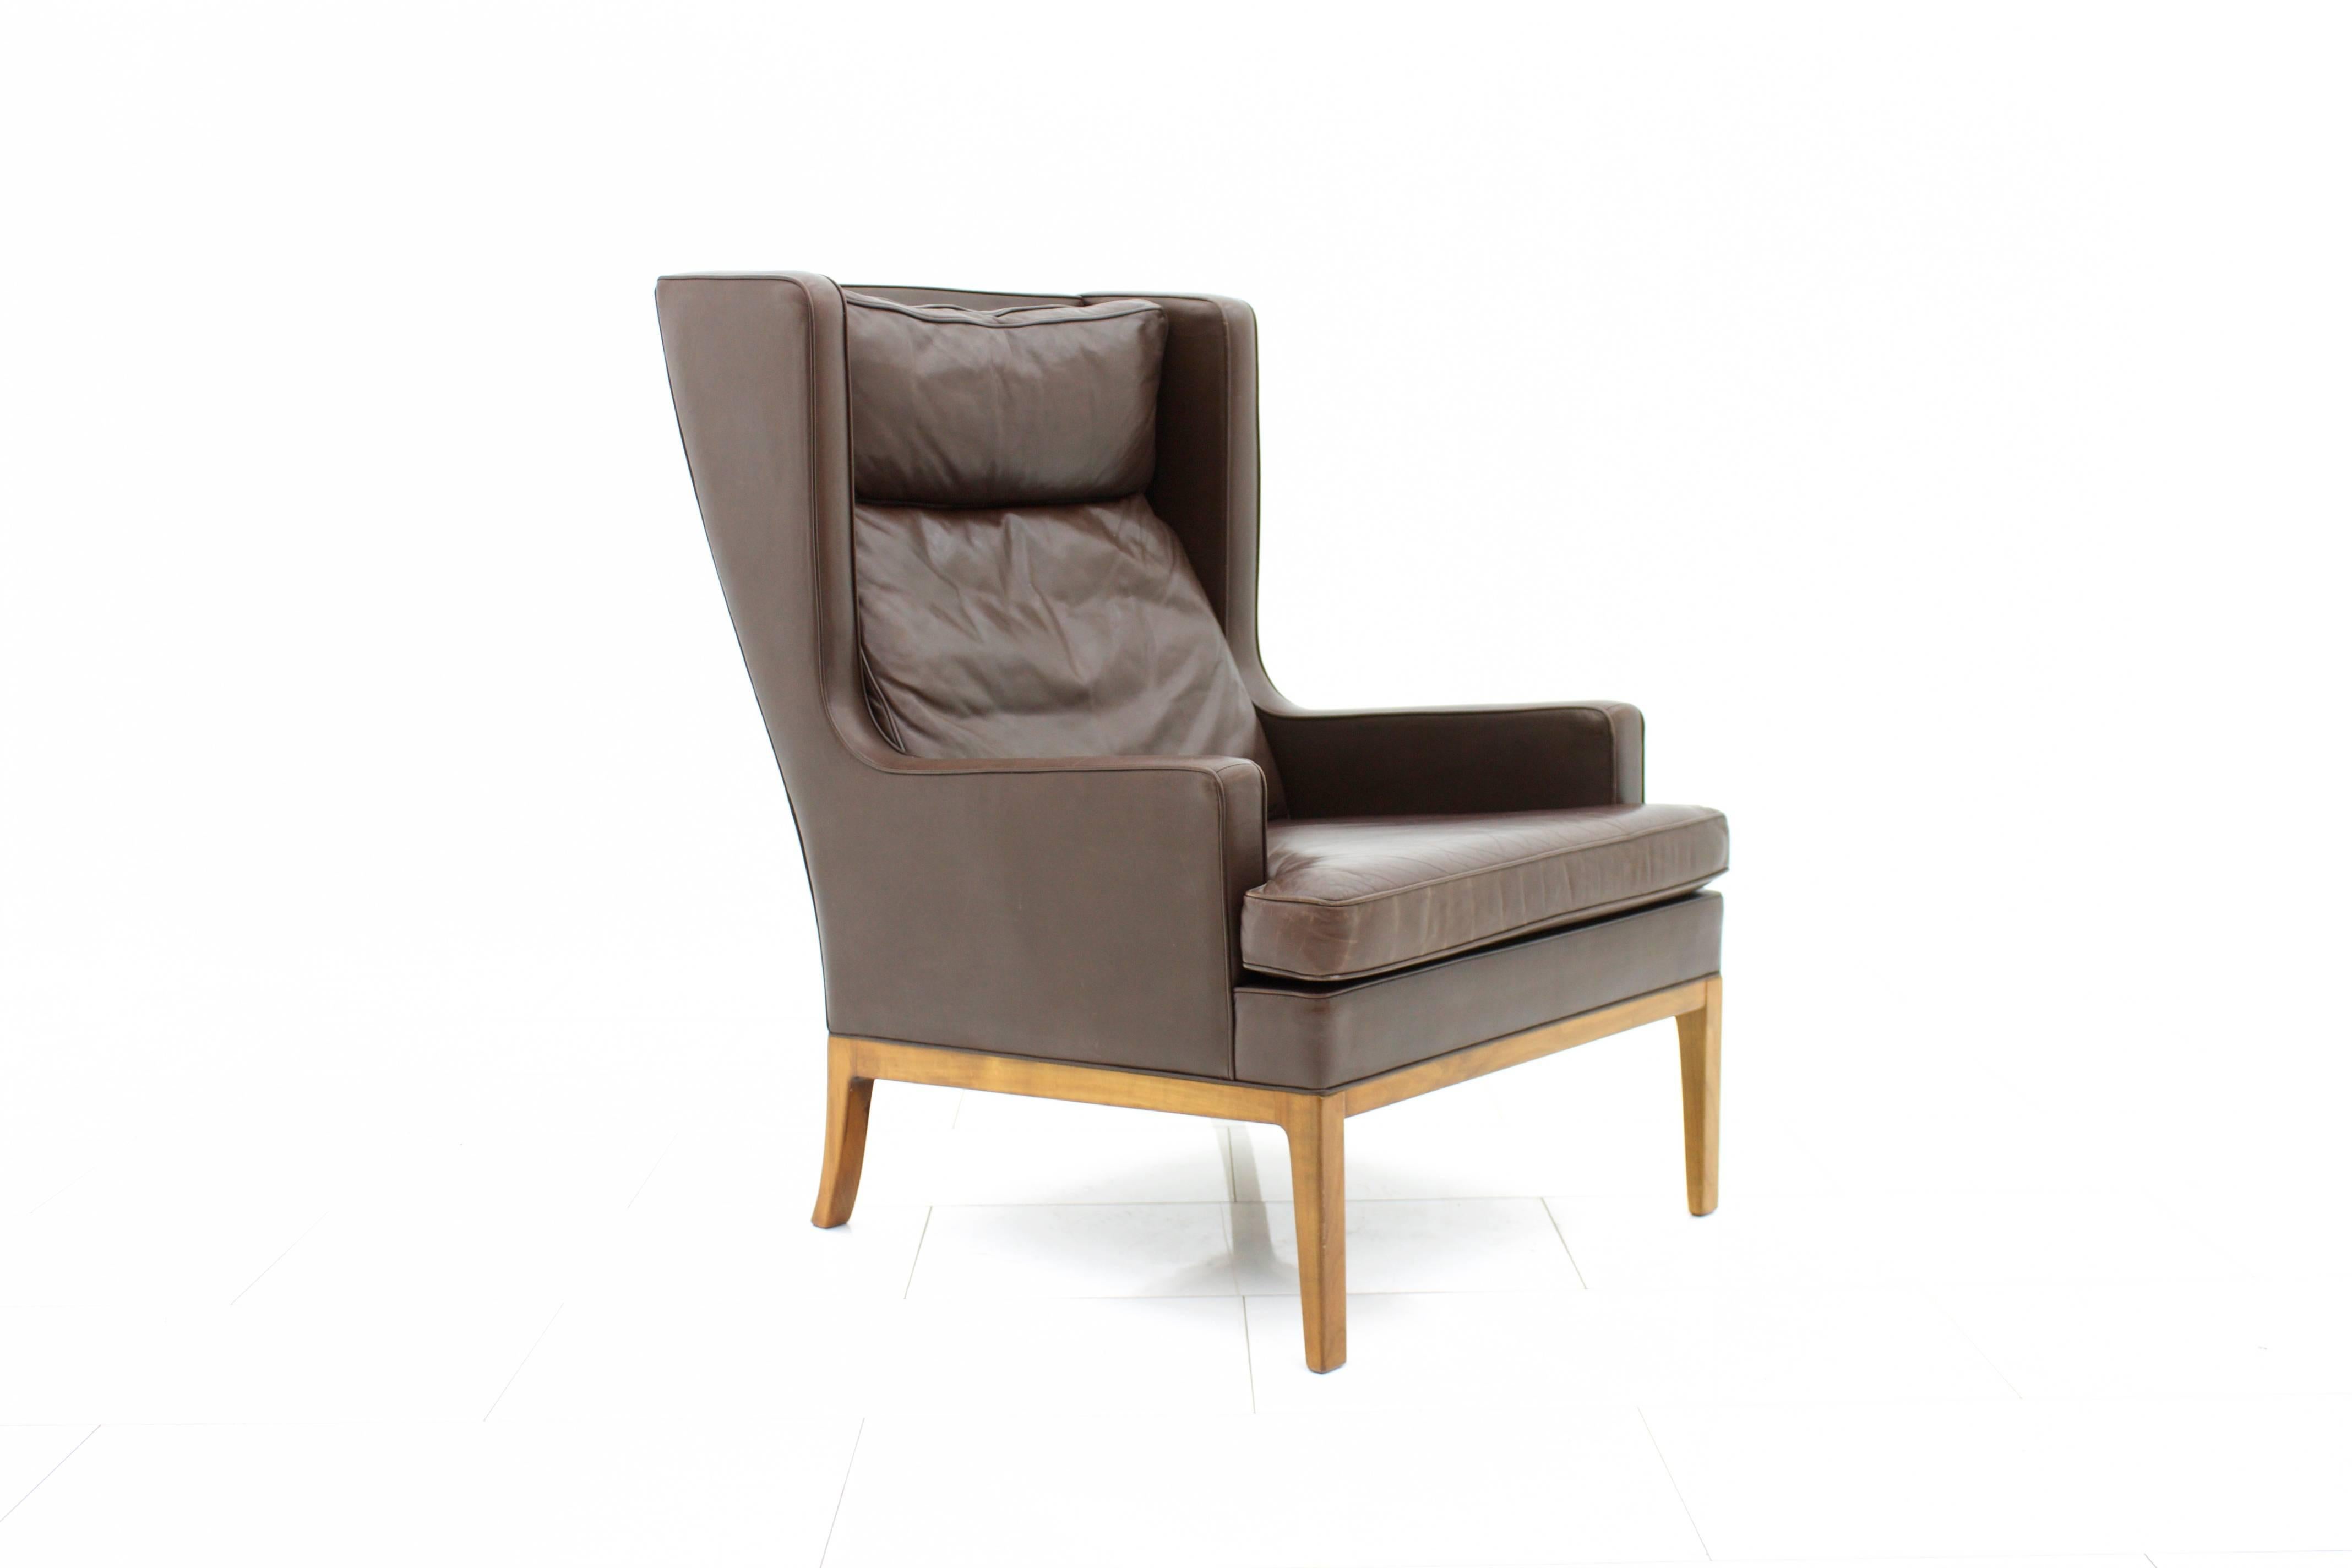 High back lounge chair by Rudolf Glatzel for Kill International, 1960s.
Good condition.